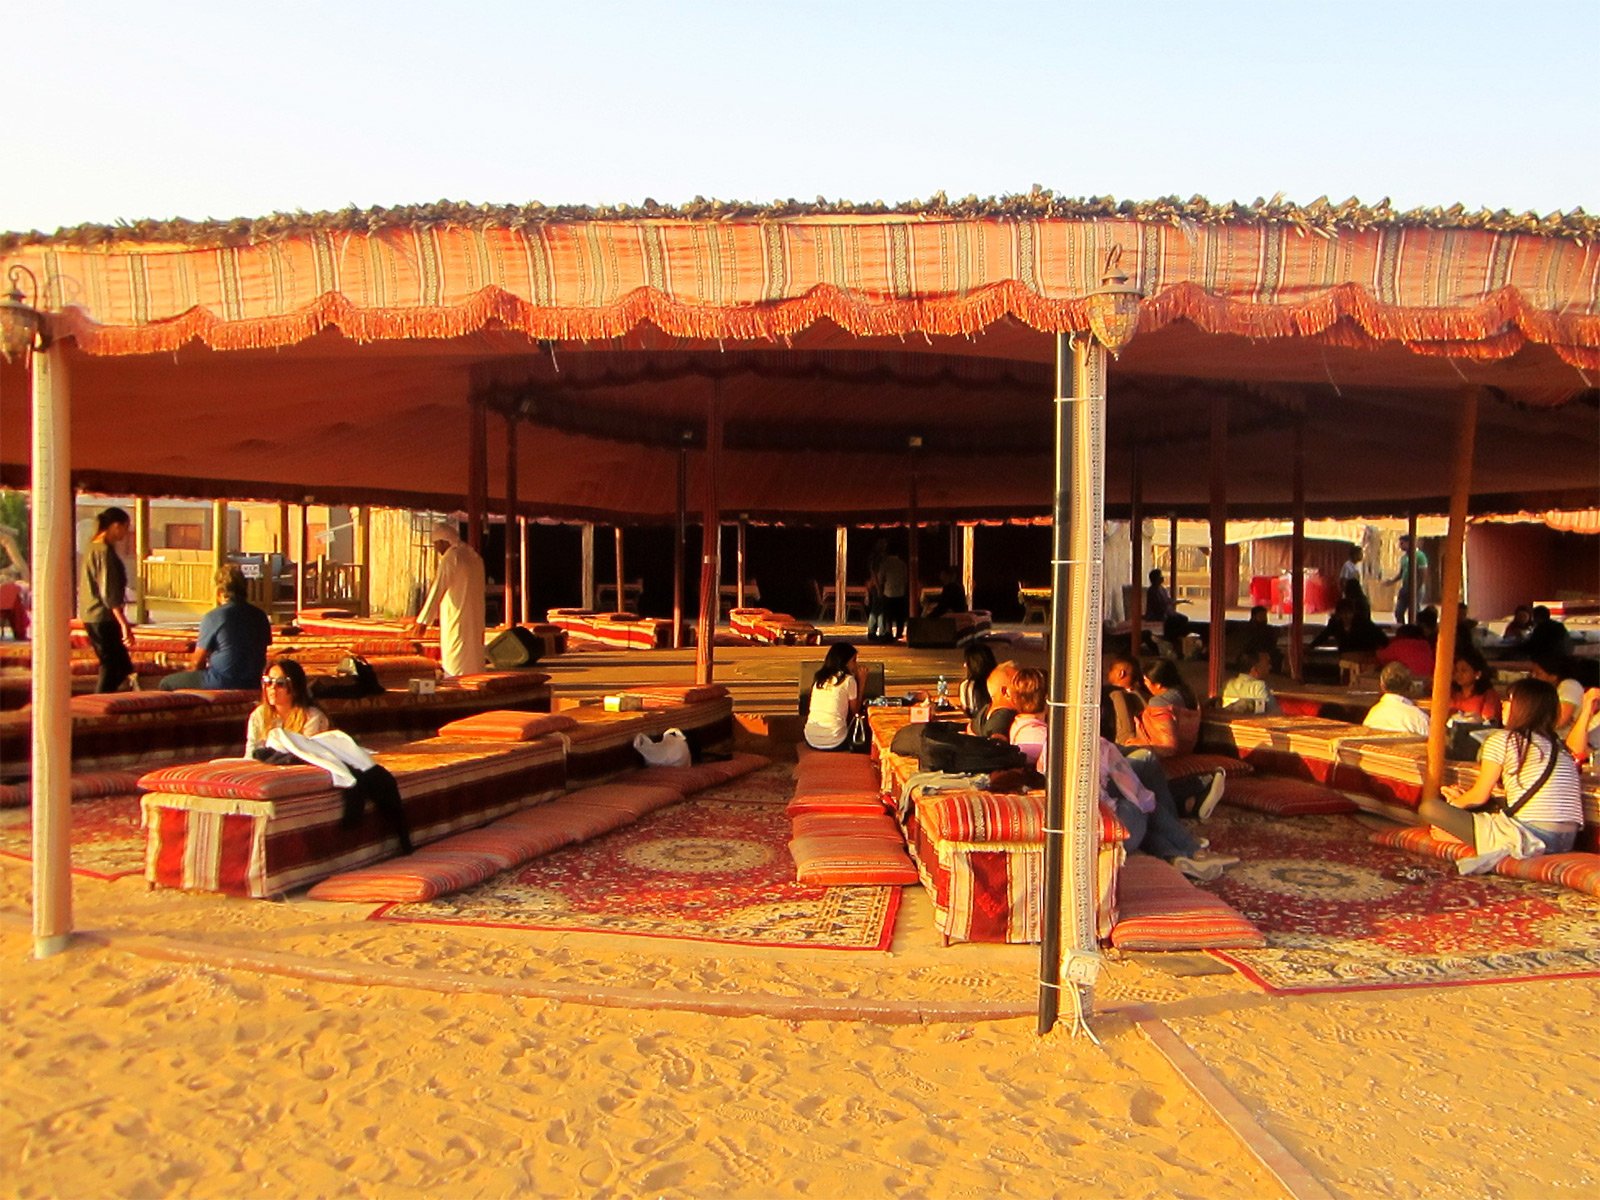 How to visit Bedouin Village in Dubai